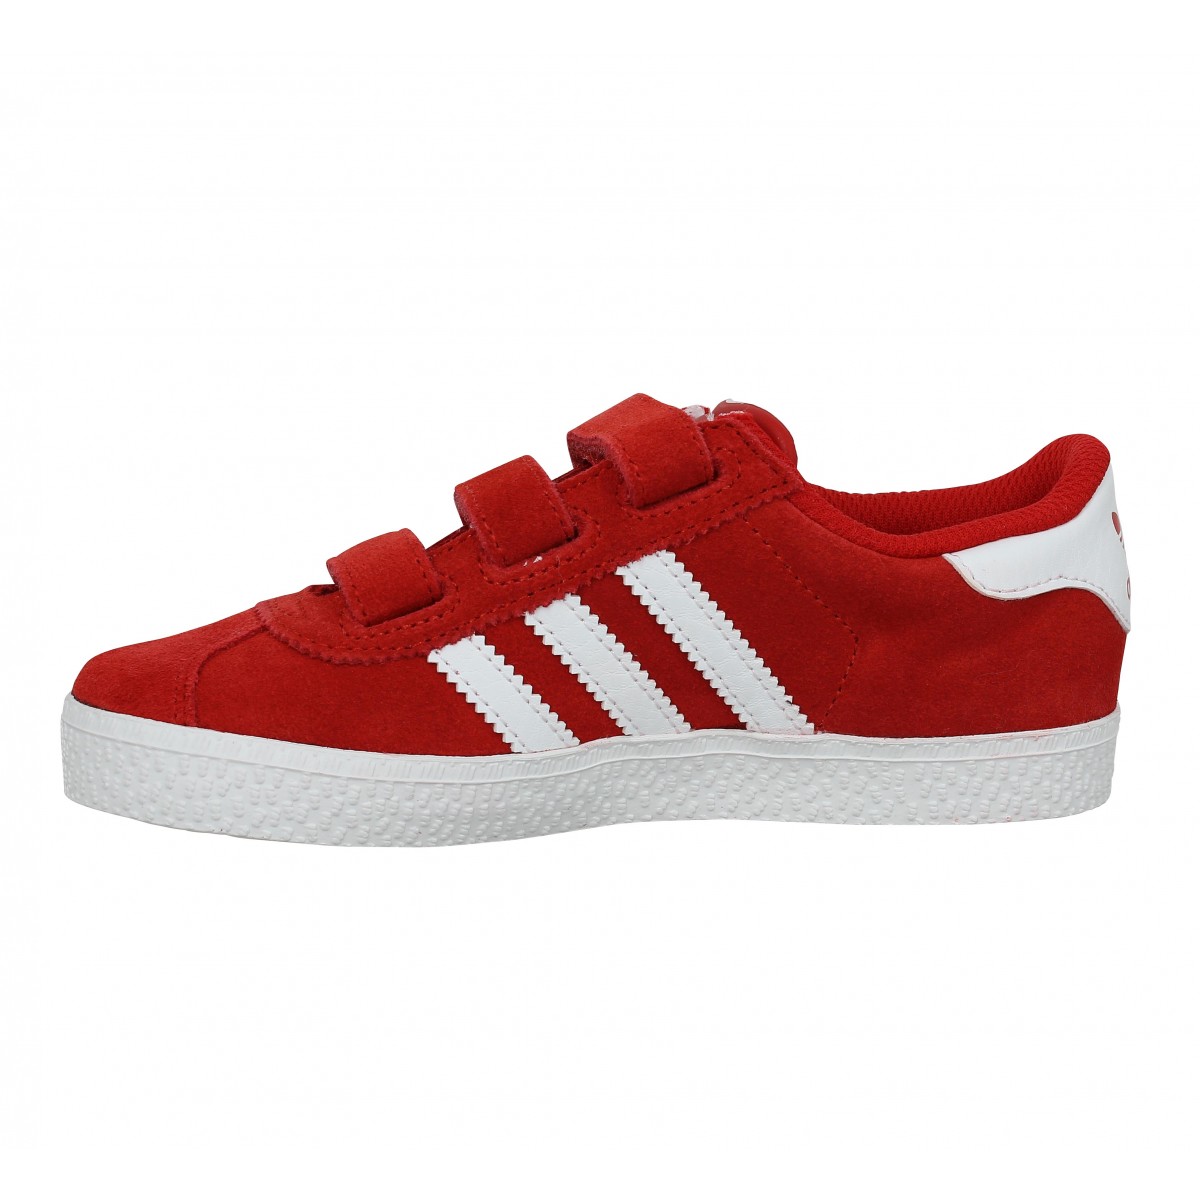 Adidas gazelle 3 velcro enfant rouge | Fanny chaussures